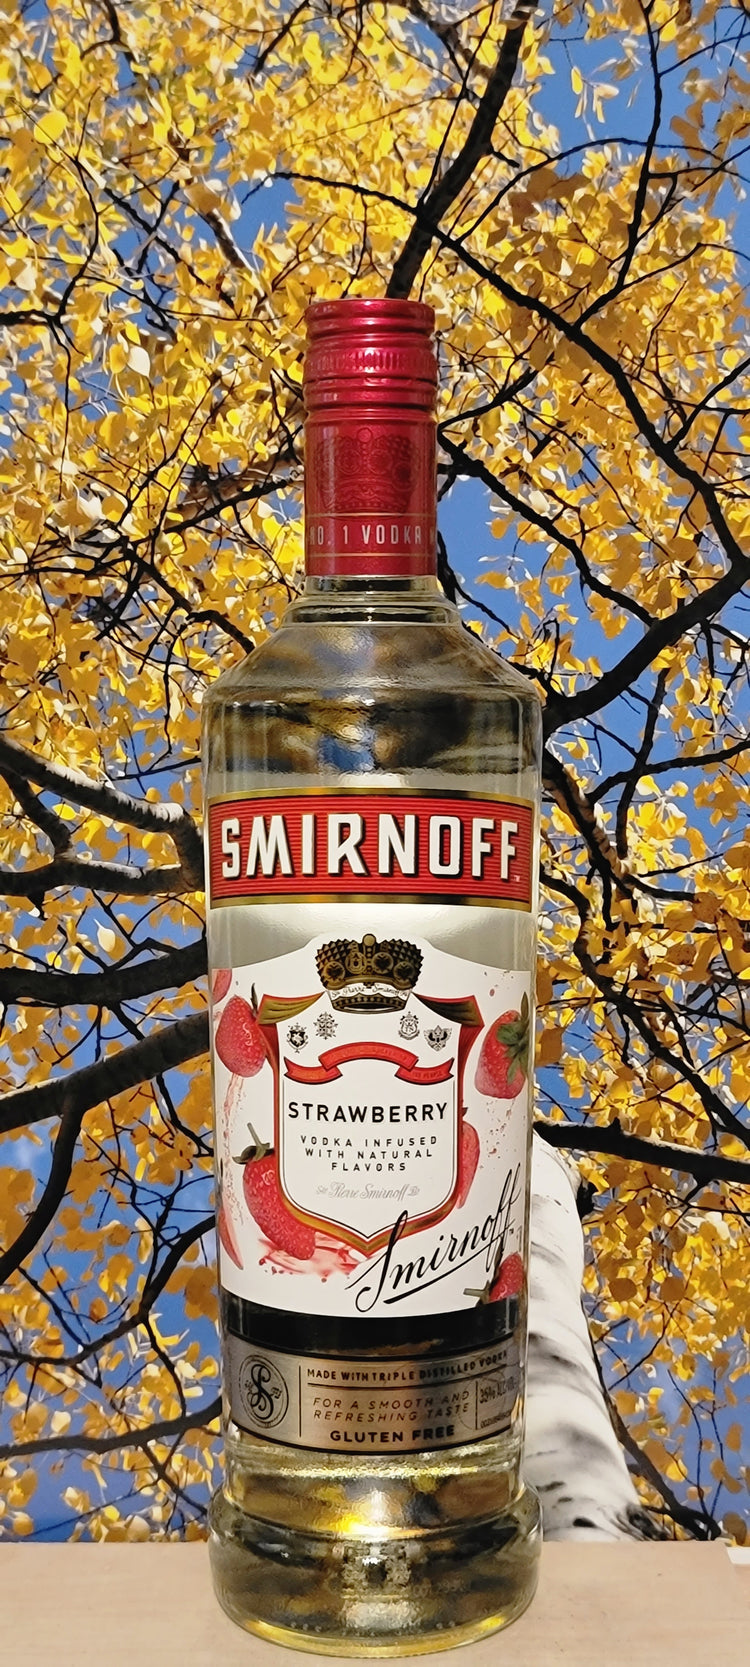 Smirnoff strawberry vodka